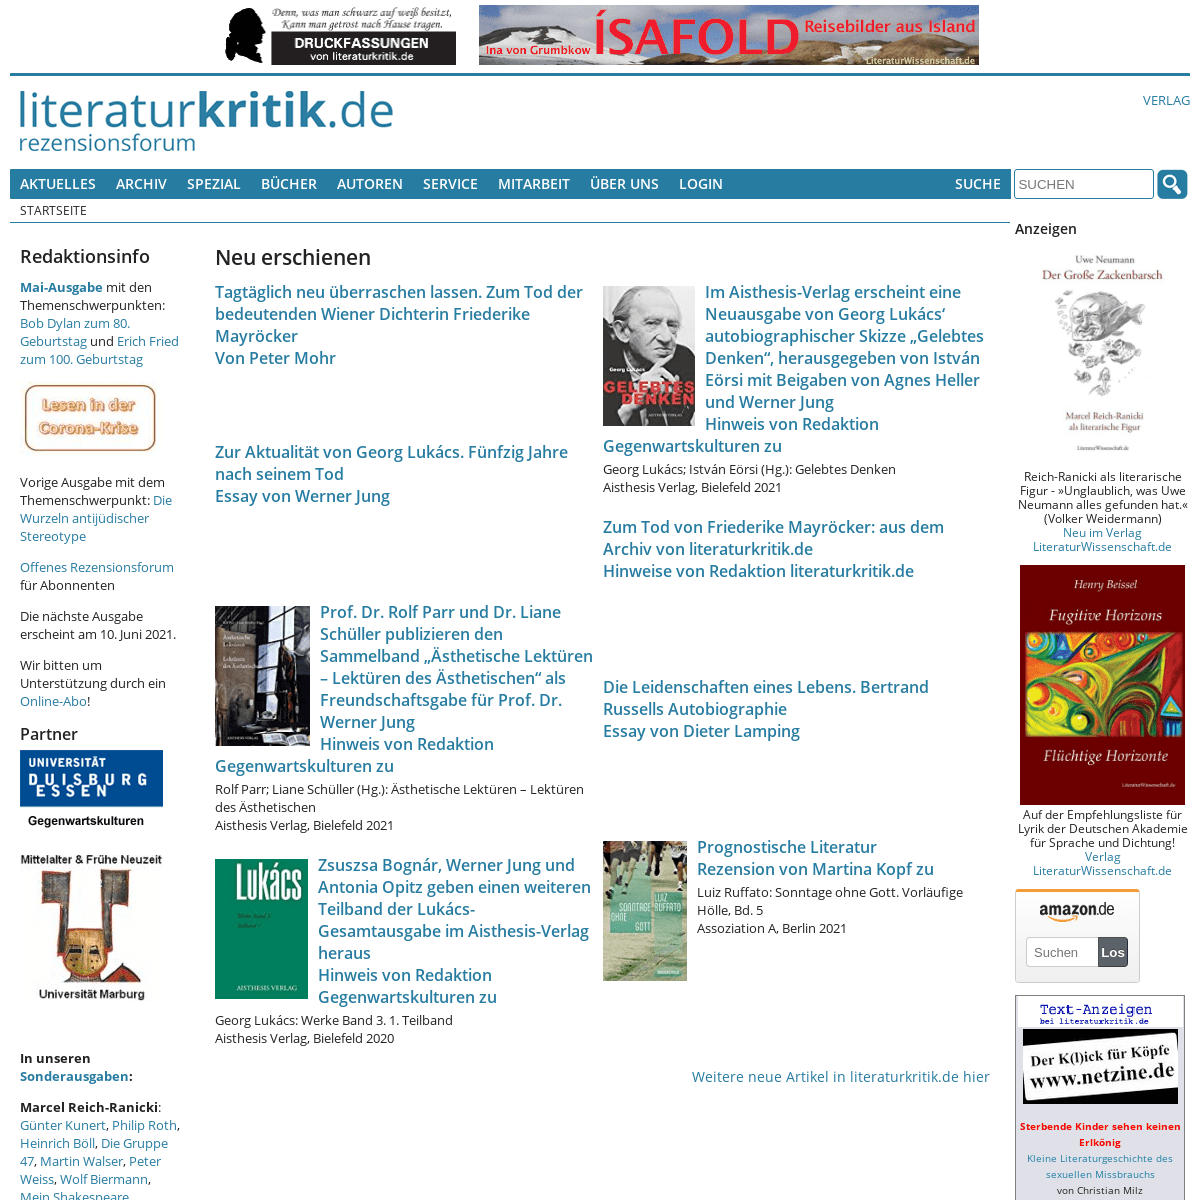 A complete backup of https://literaturkritik.de